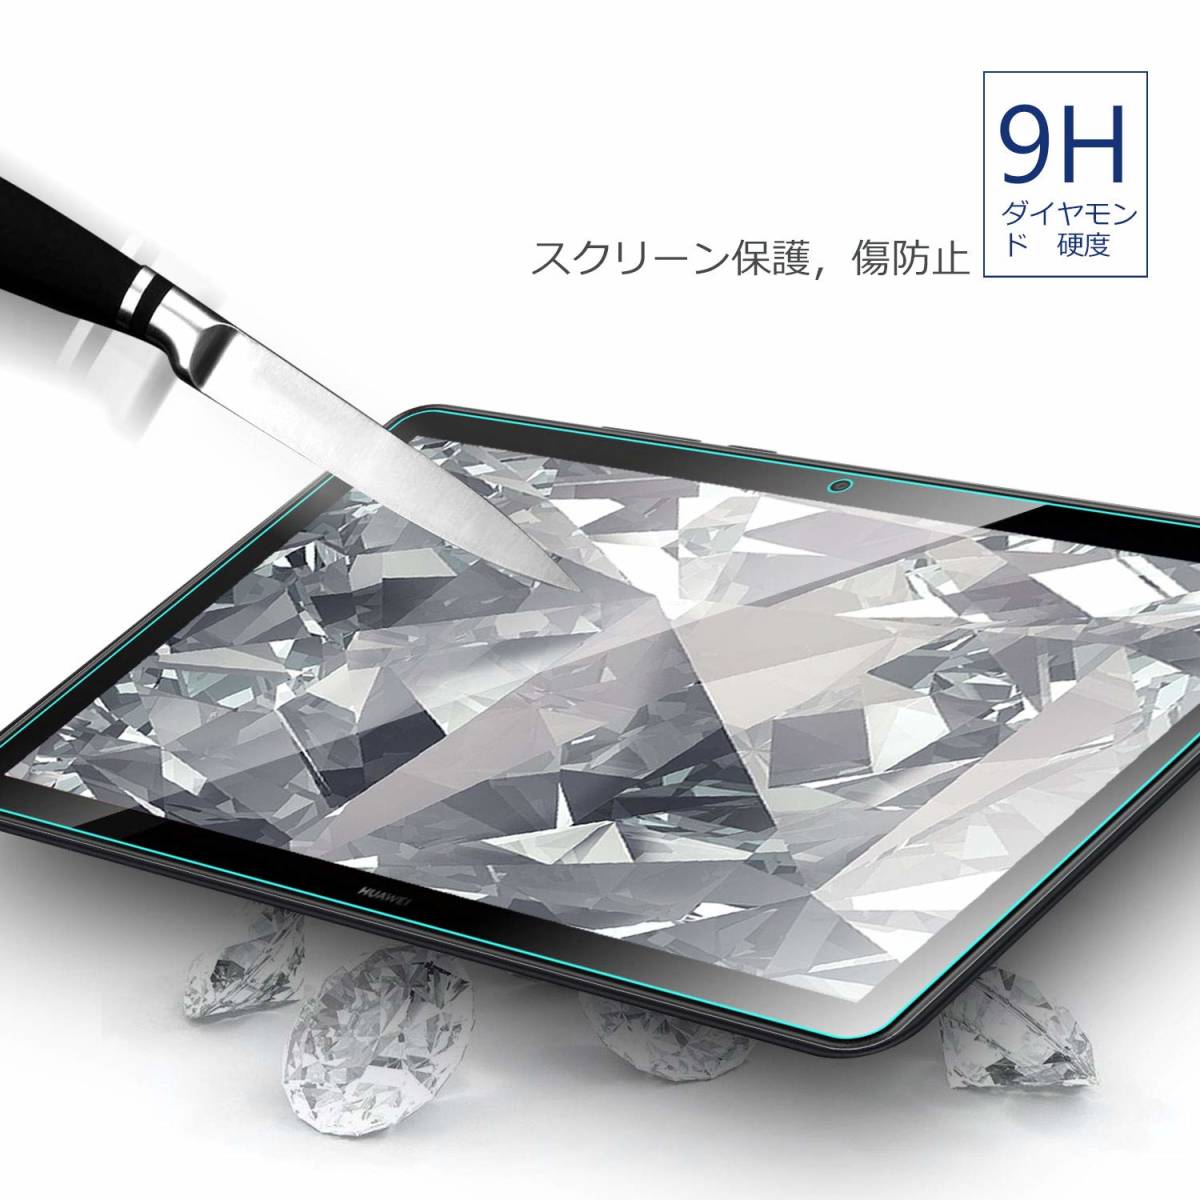 【DB6H】Huawei MediaPad T5 10 液晶保護フィルム 10インチ 新型 強化ガラス 撥油性 9H ラウンド加工 飛散防止 高透過率 光沢仕様 指紋防止_画像4